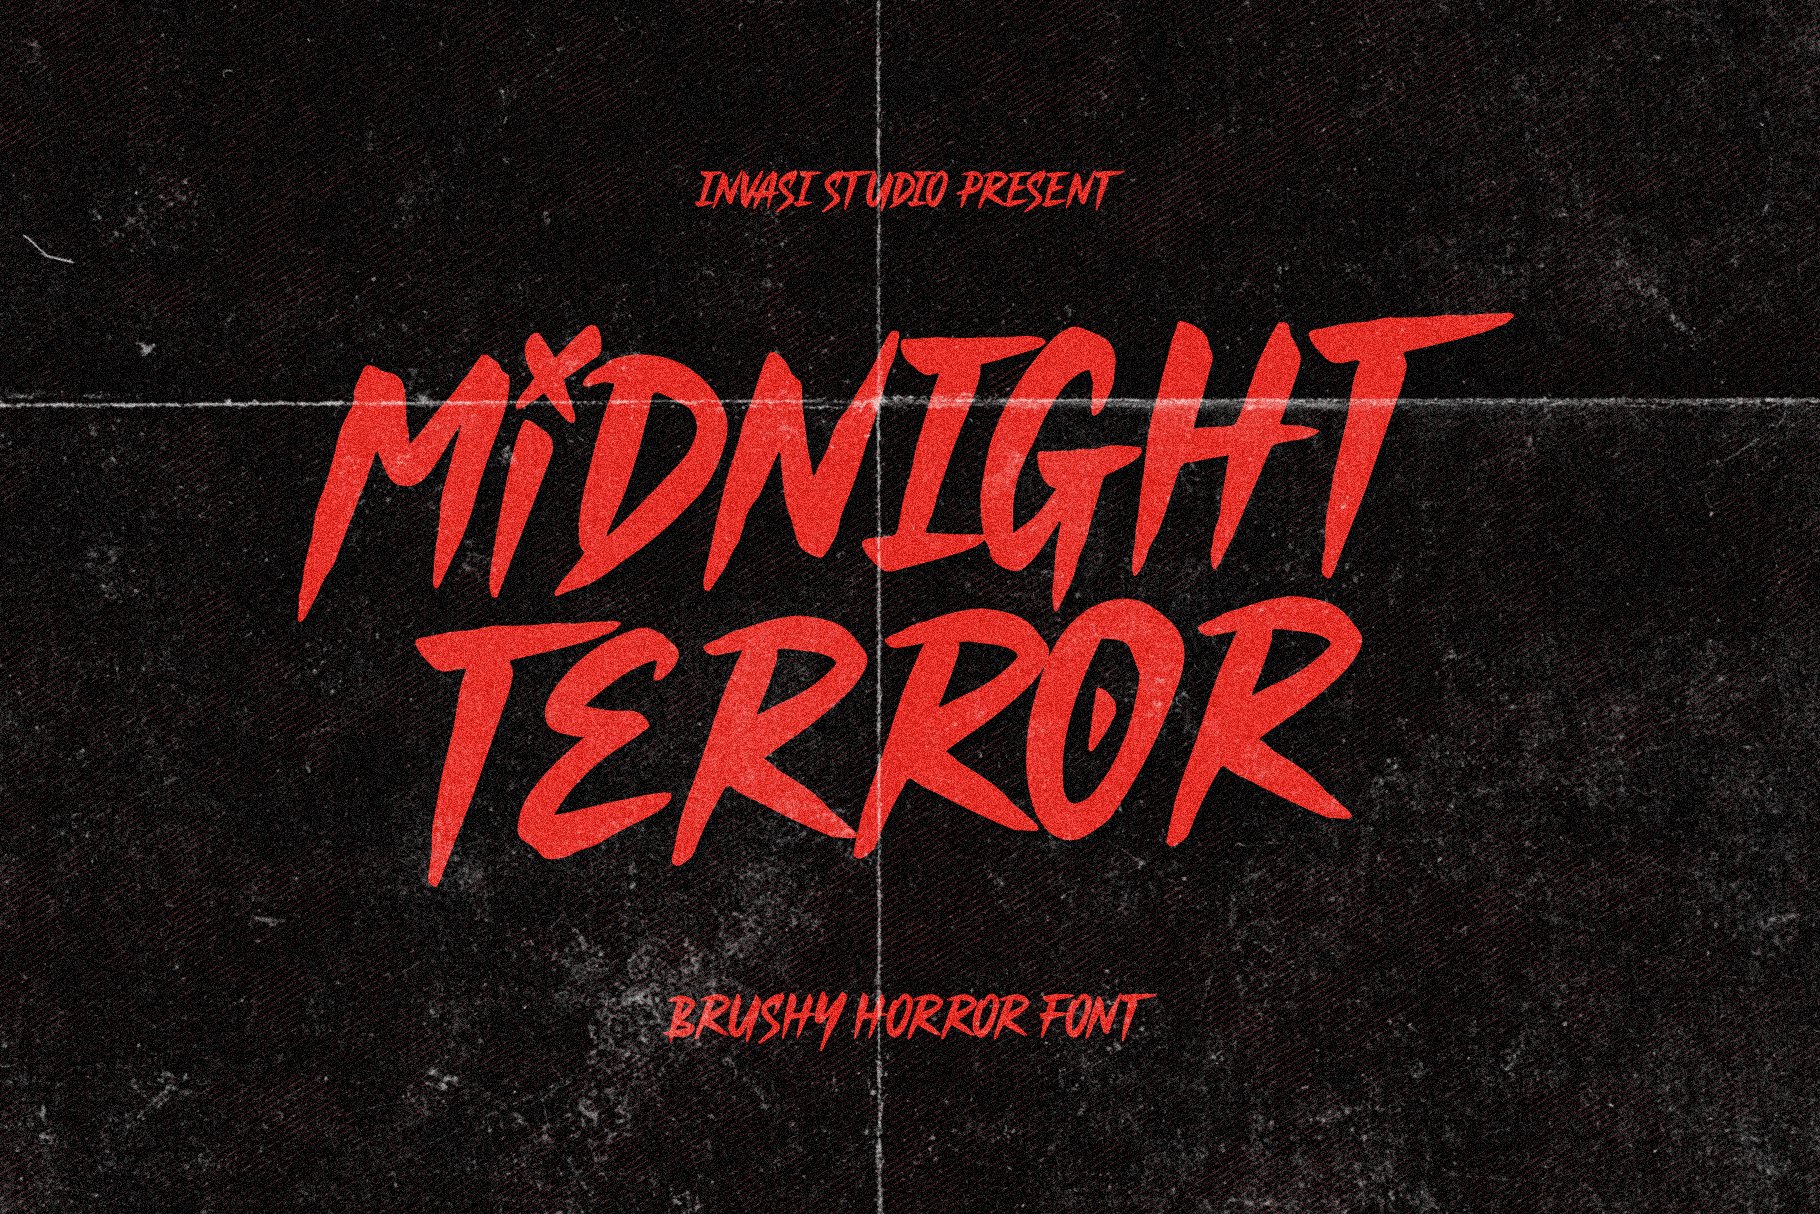 Midnight Terror - Horror Font cover image.